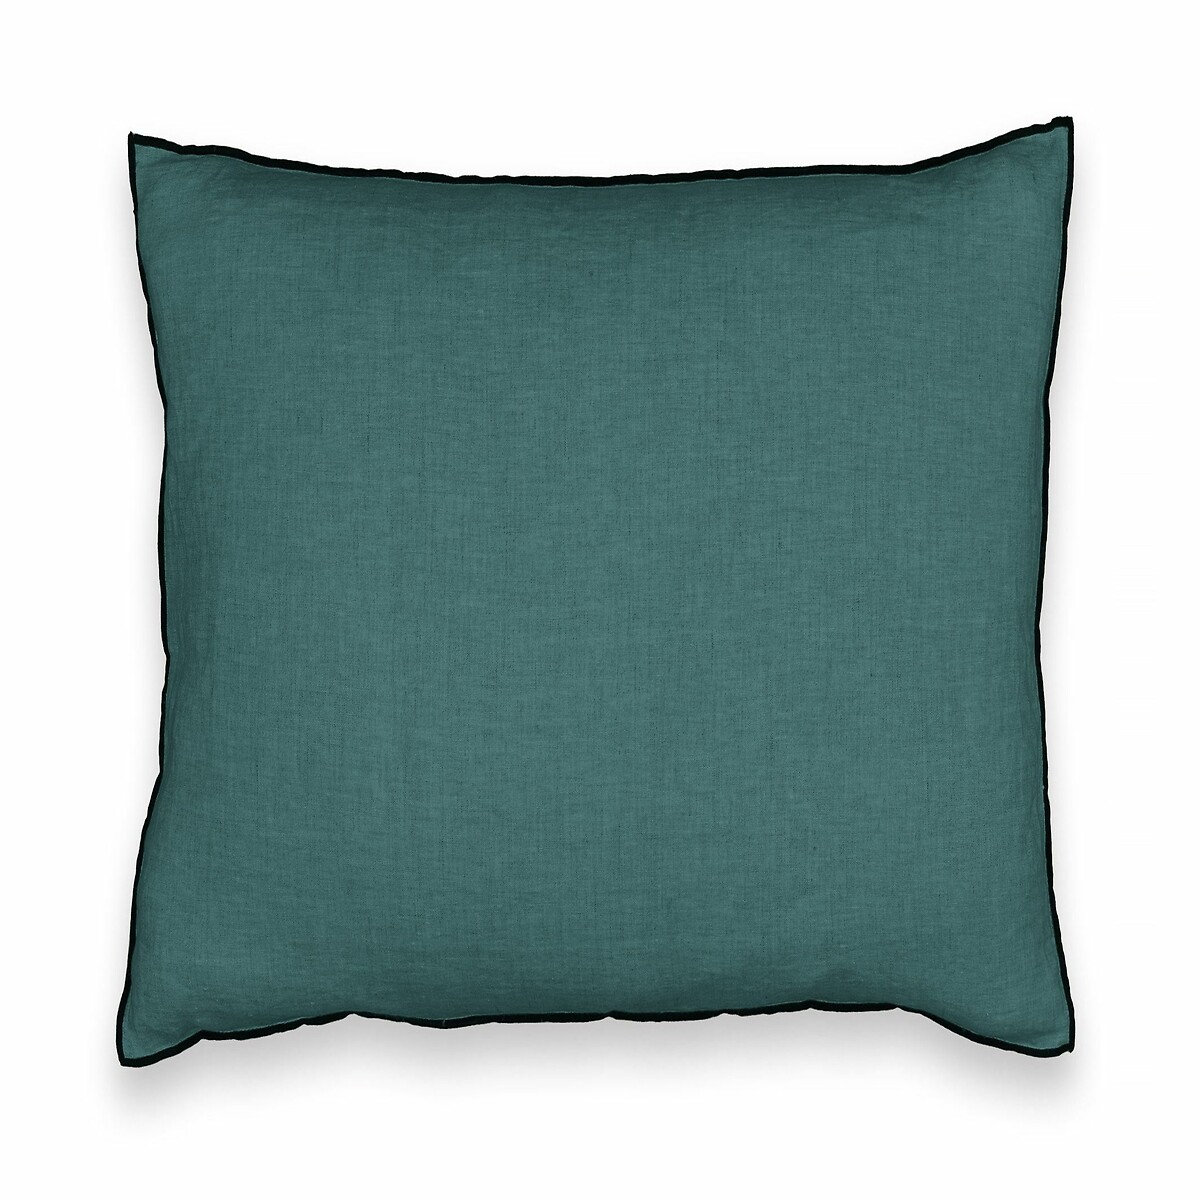 Чехол LaRedoute На подушку 100 стираный лен ELina 60 x 40 см зеленый, размер 60 x 40 см - фото 2